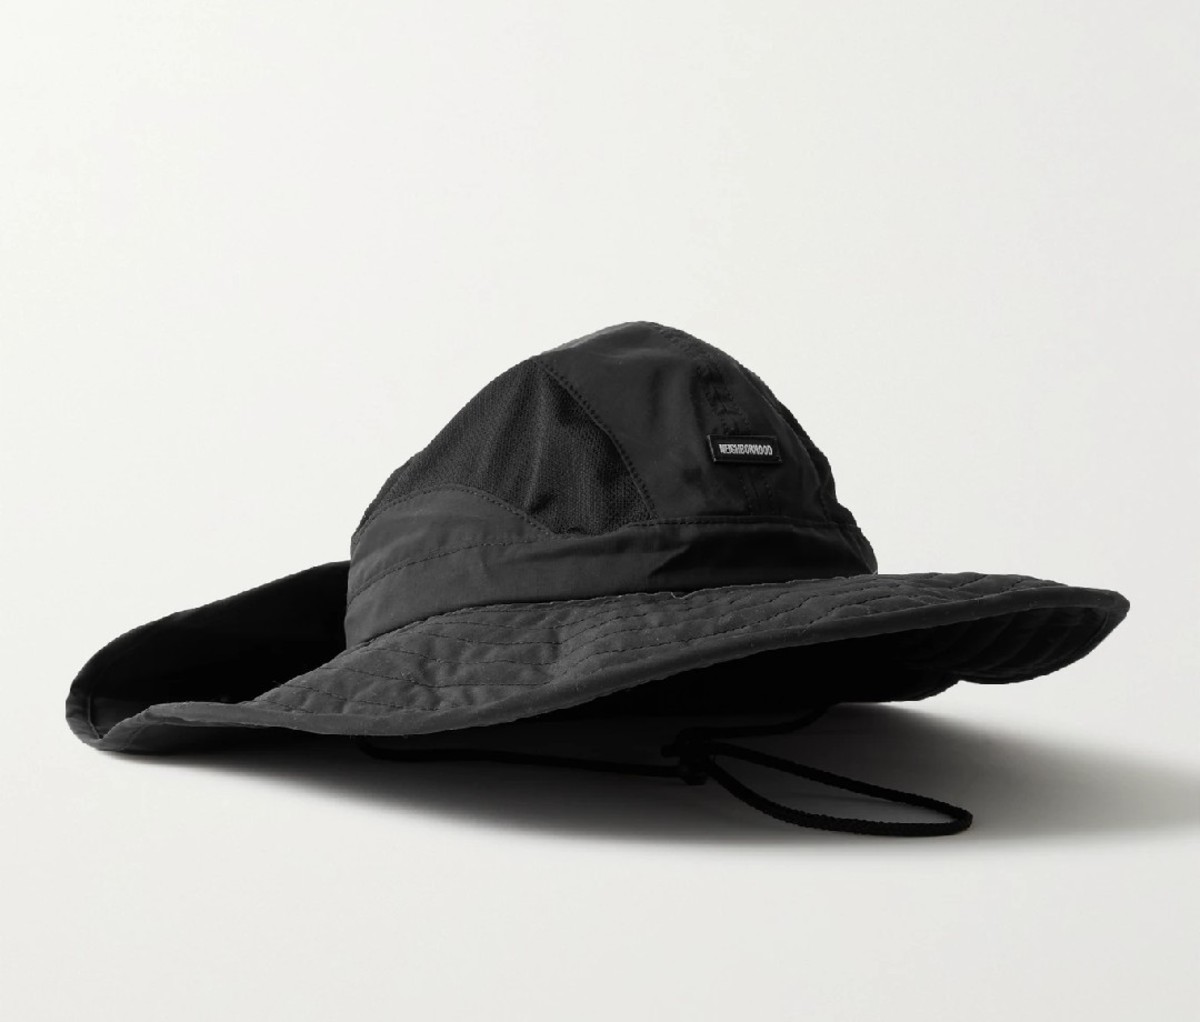 Mr. Pen- Bucket Hat, Black, Men Bucket Hats, Black Bucket Hats for Men, Bucket  Hat Men, Fishing Hats for Men, Men's Bucket Hat, Beach Bucket Hat, Bucket  Hat Black, Summer Hats for